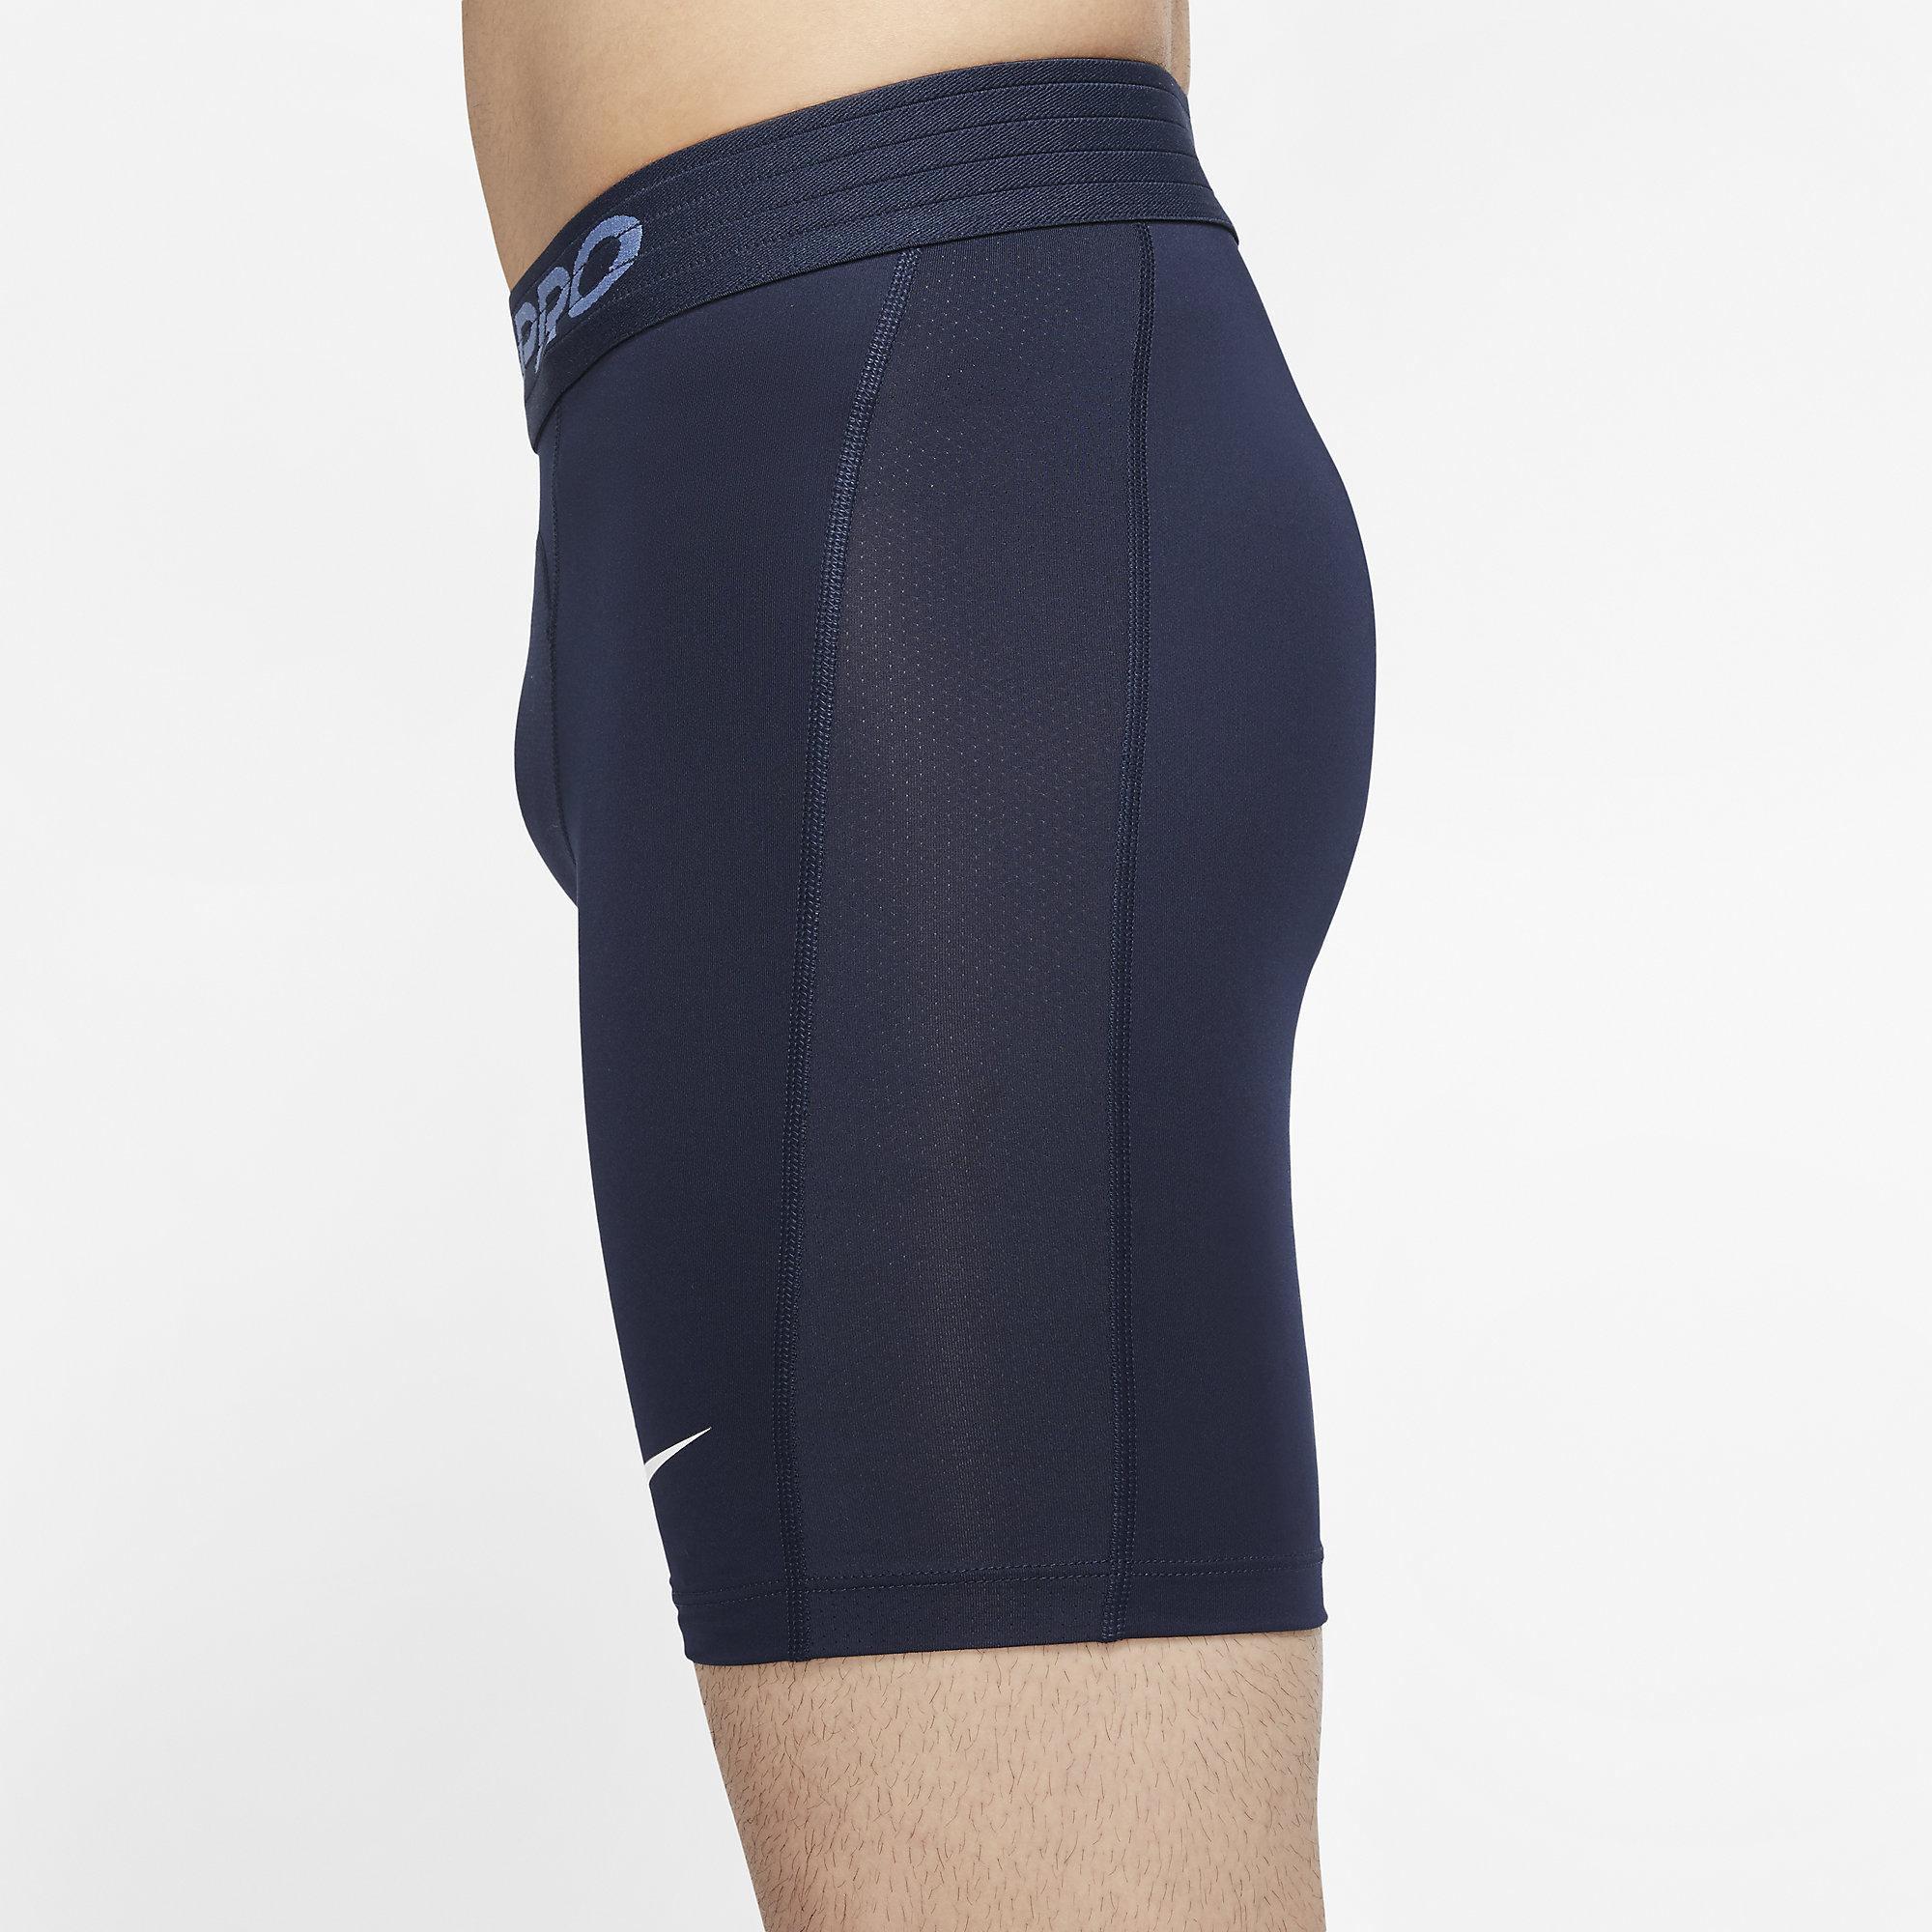 Nike Mens Pro Shorts - Obsidian - Tennisnuts.com